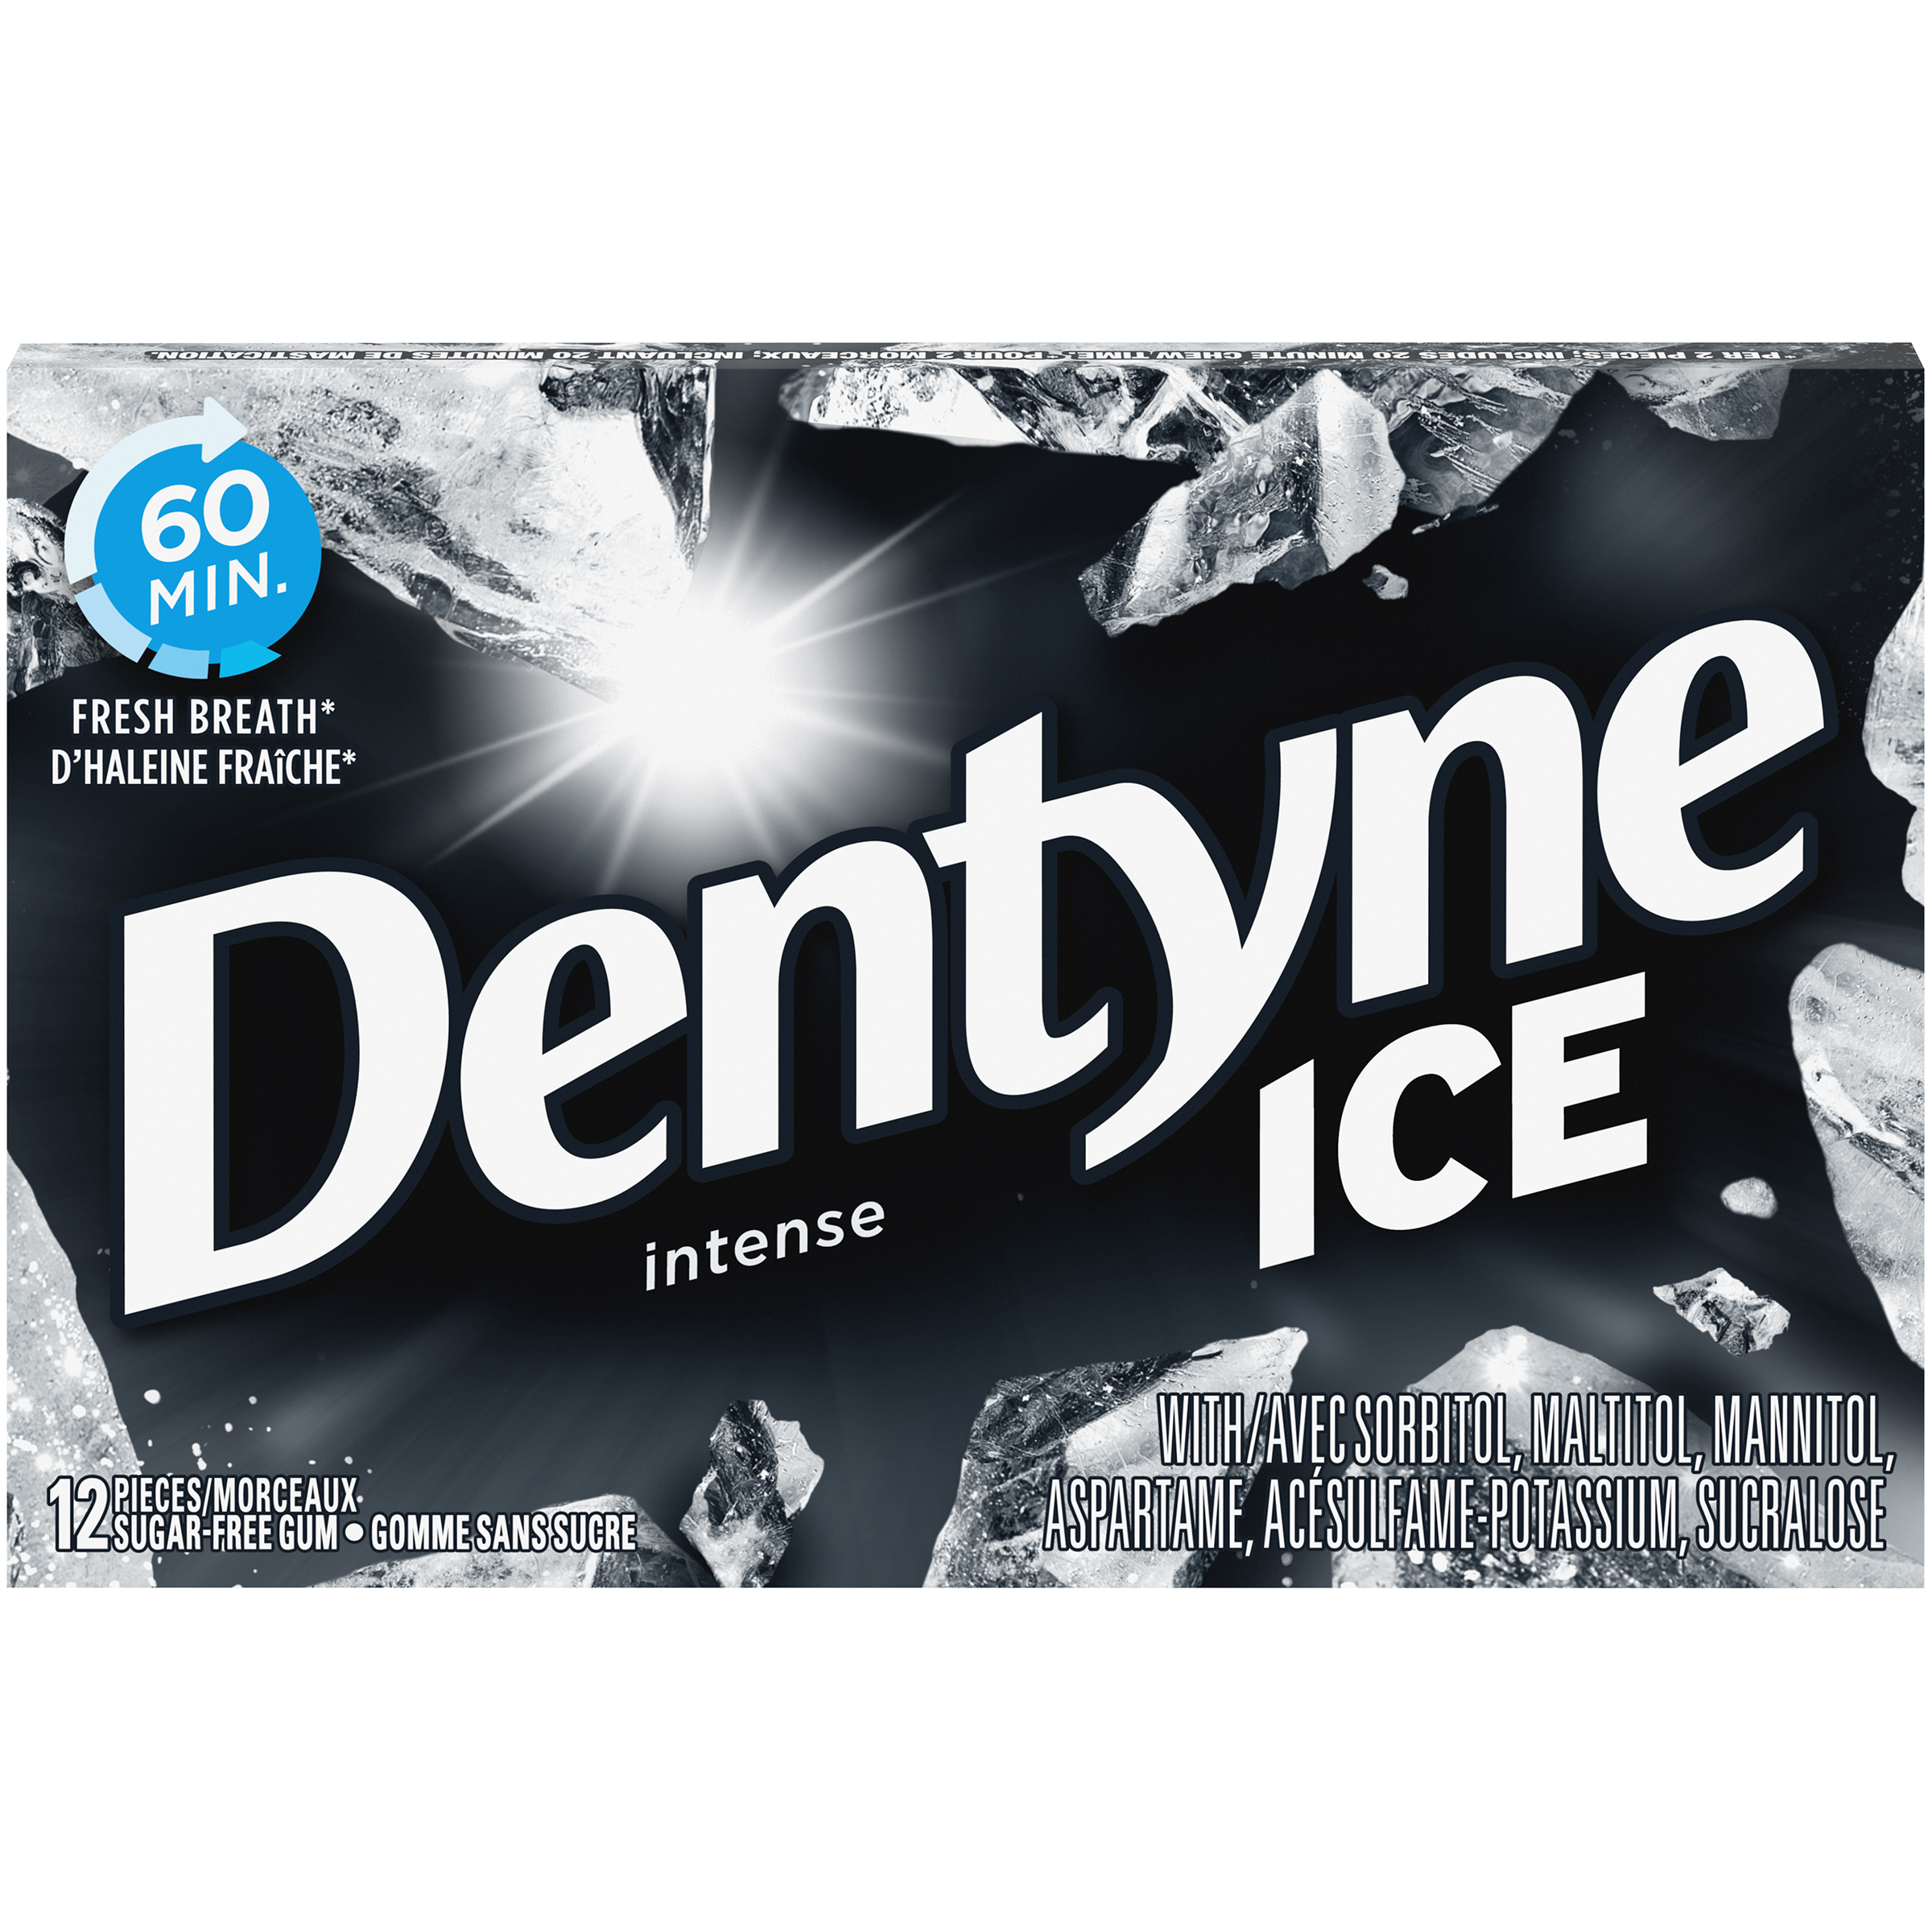 DENTYNE ICE INTENSE 12MCX